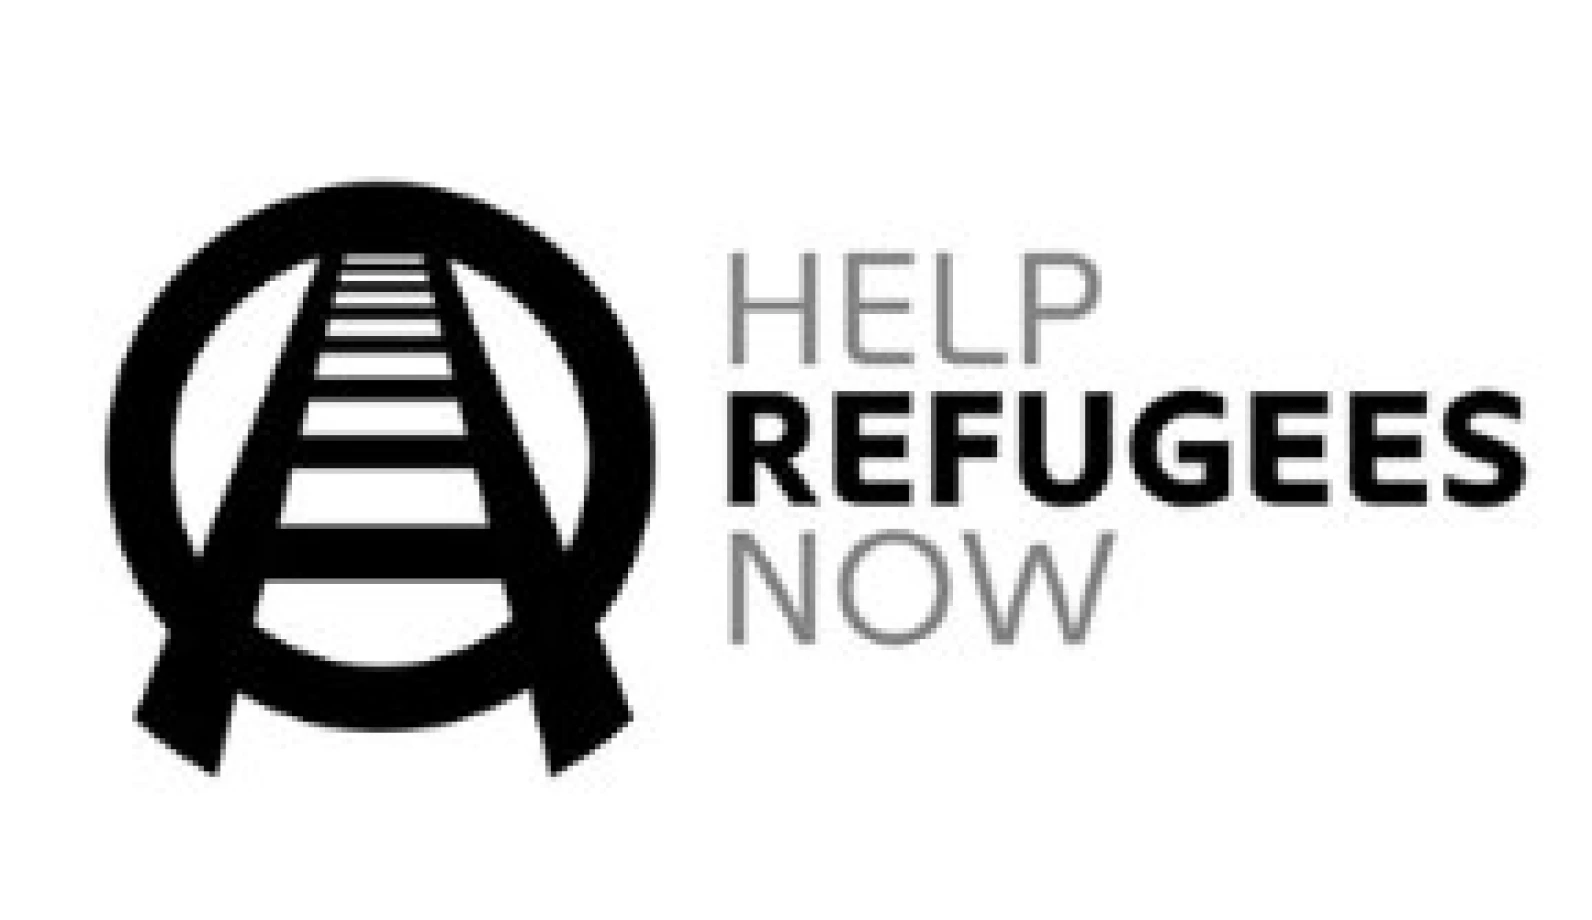 Register your willingness to help refugees via a new website